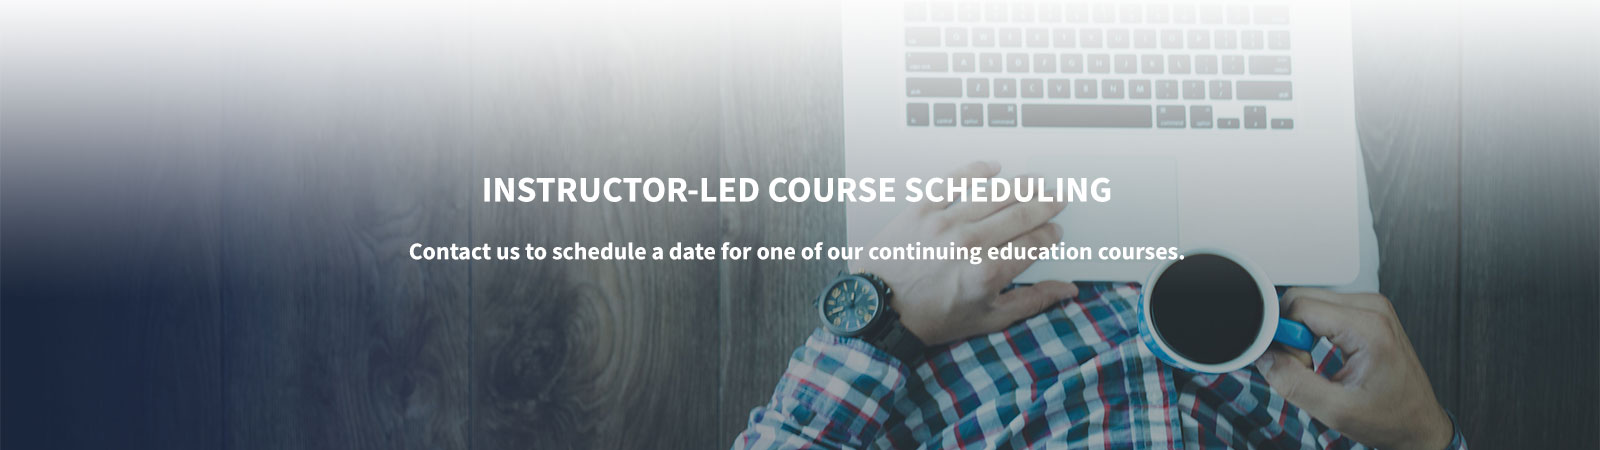 FSR instructor-led course scheduling